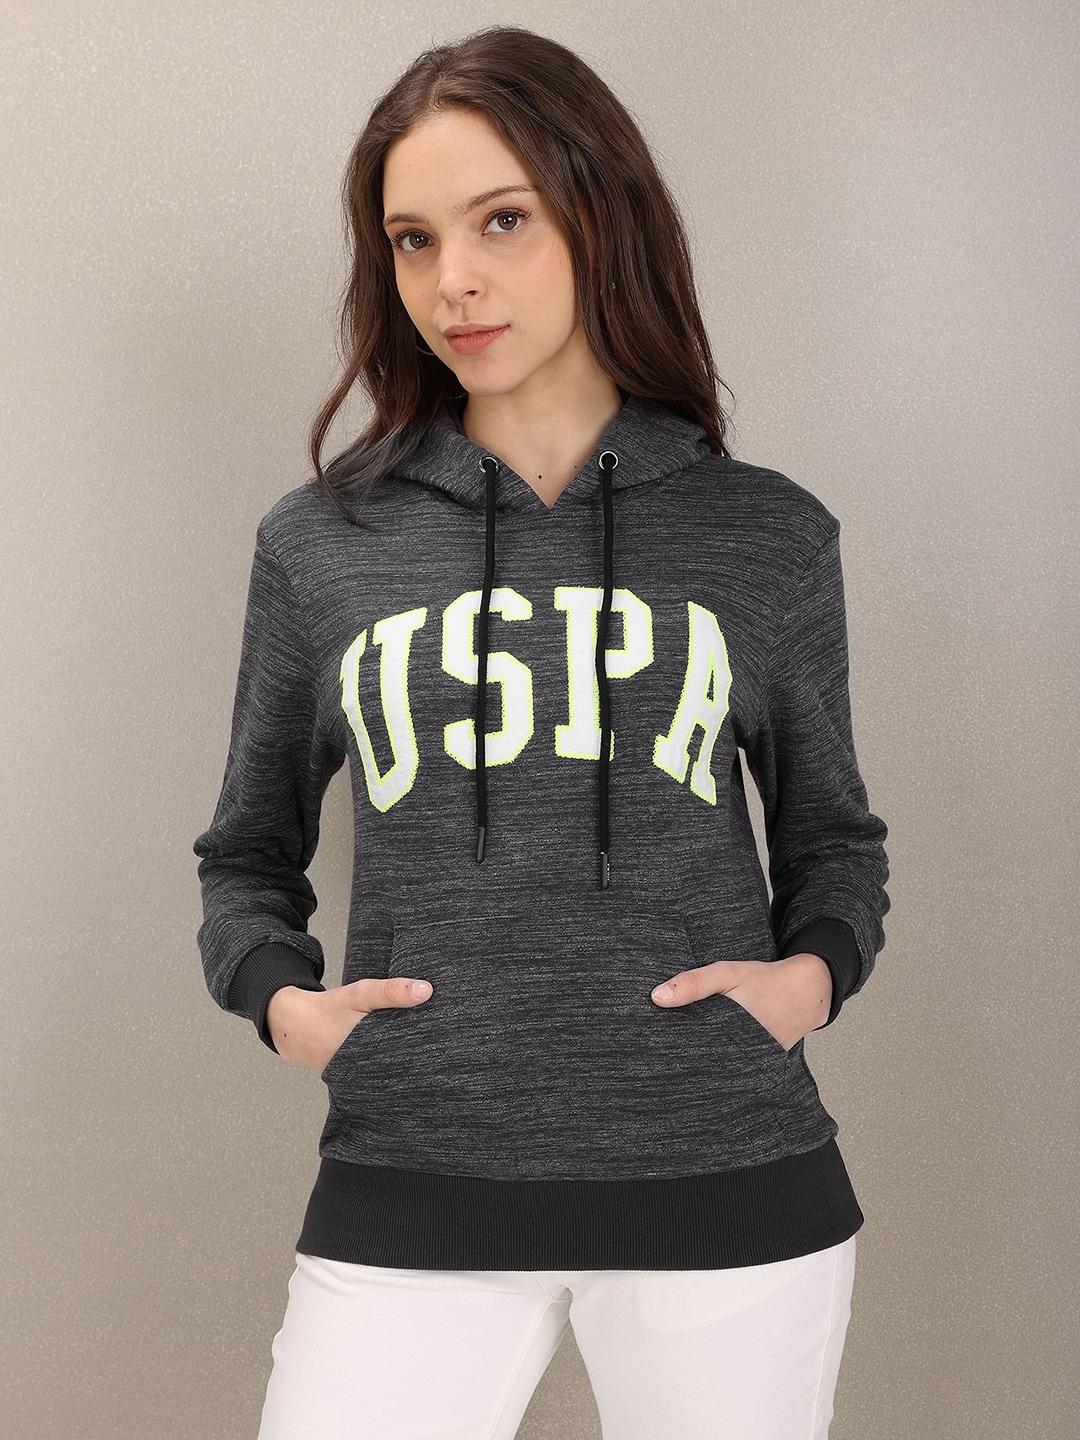 u.s.-polo-assn.-women-charcoal-grey-printed-hooded-sweatshirt